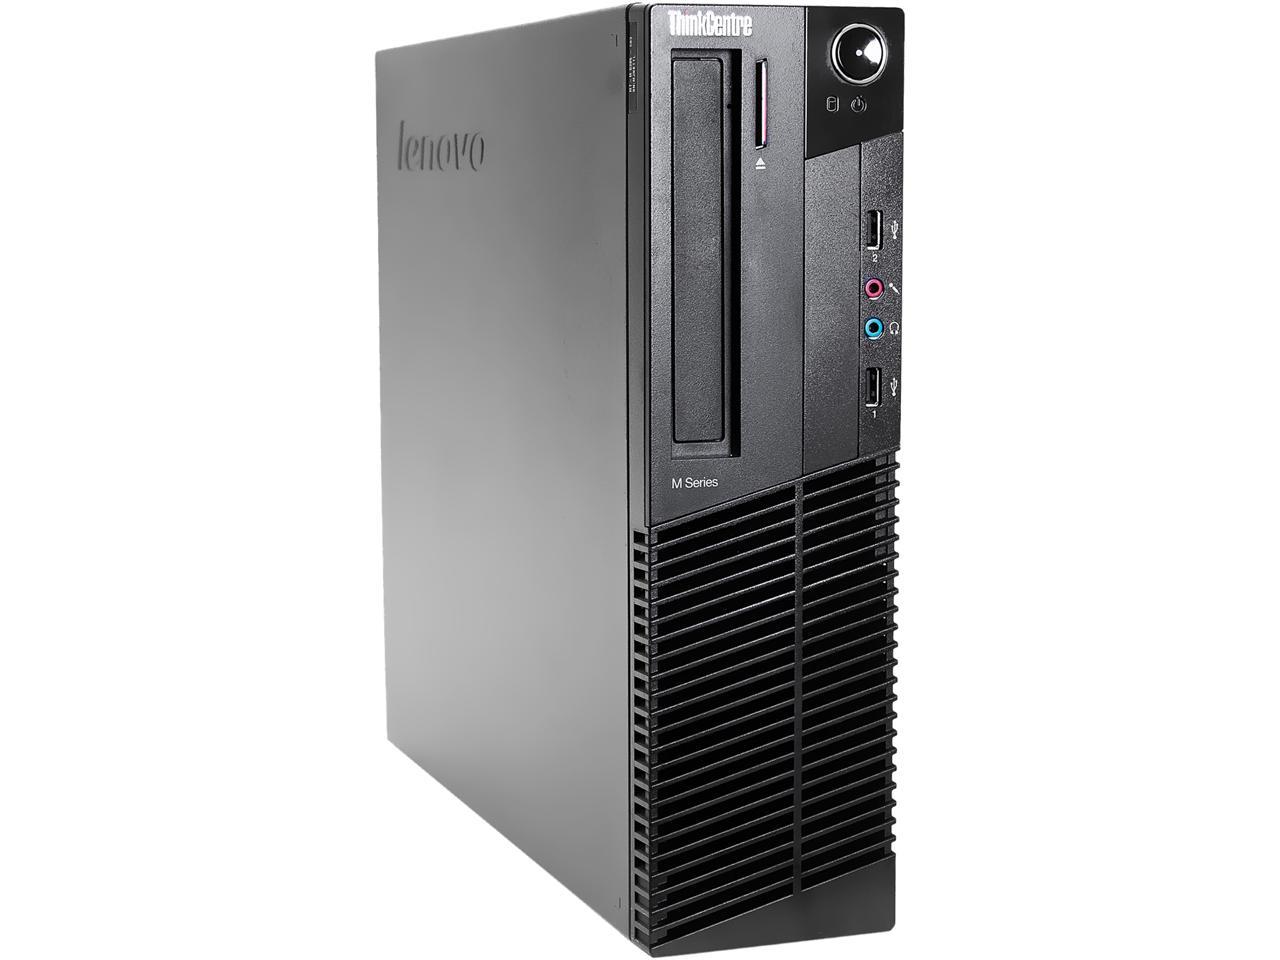 Lenovo Desktop Computer M82-SFF Intel Core i5 3rd Gen 3470 (3.20 GHz) 4 GB DDR3 500 GB HDD Windows 10 Pro 64-Bit